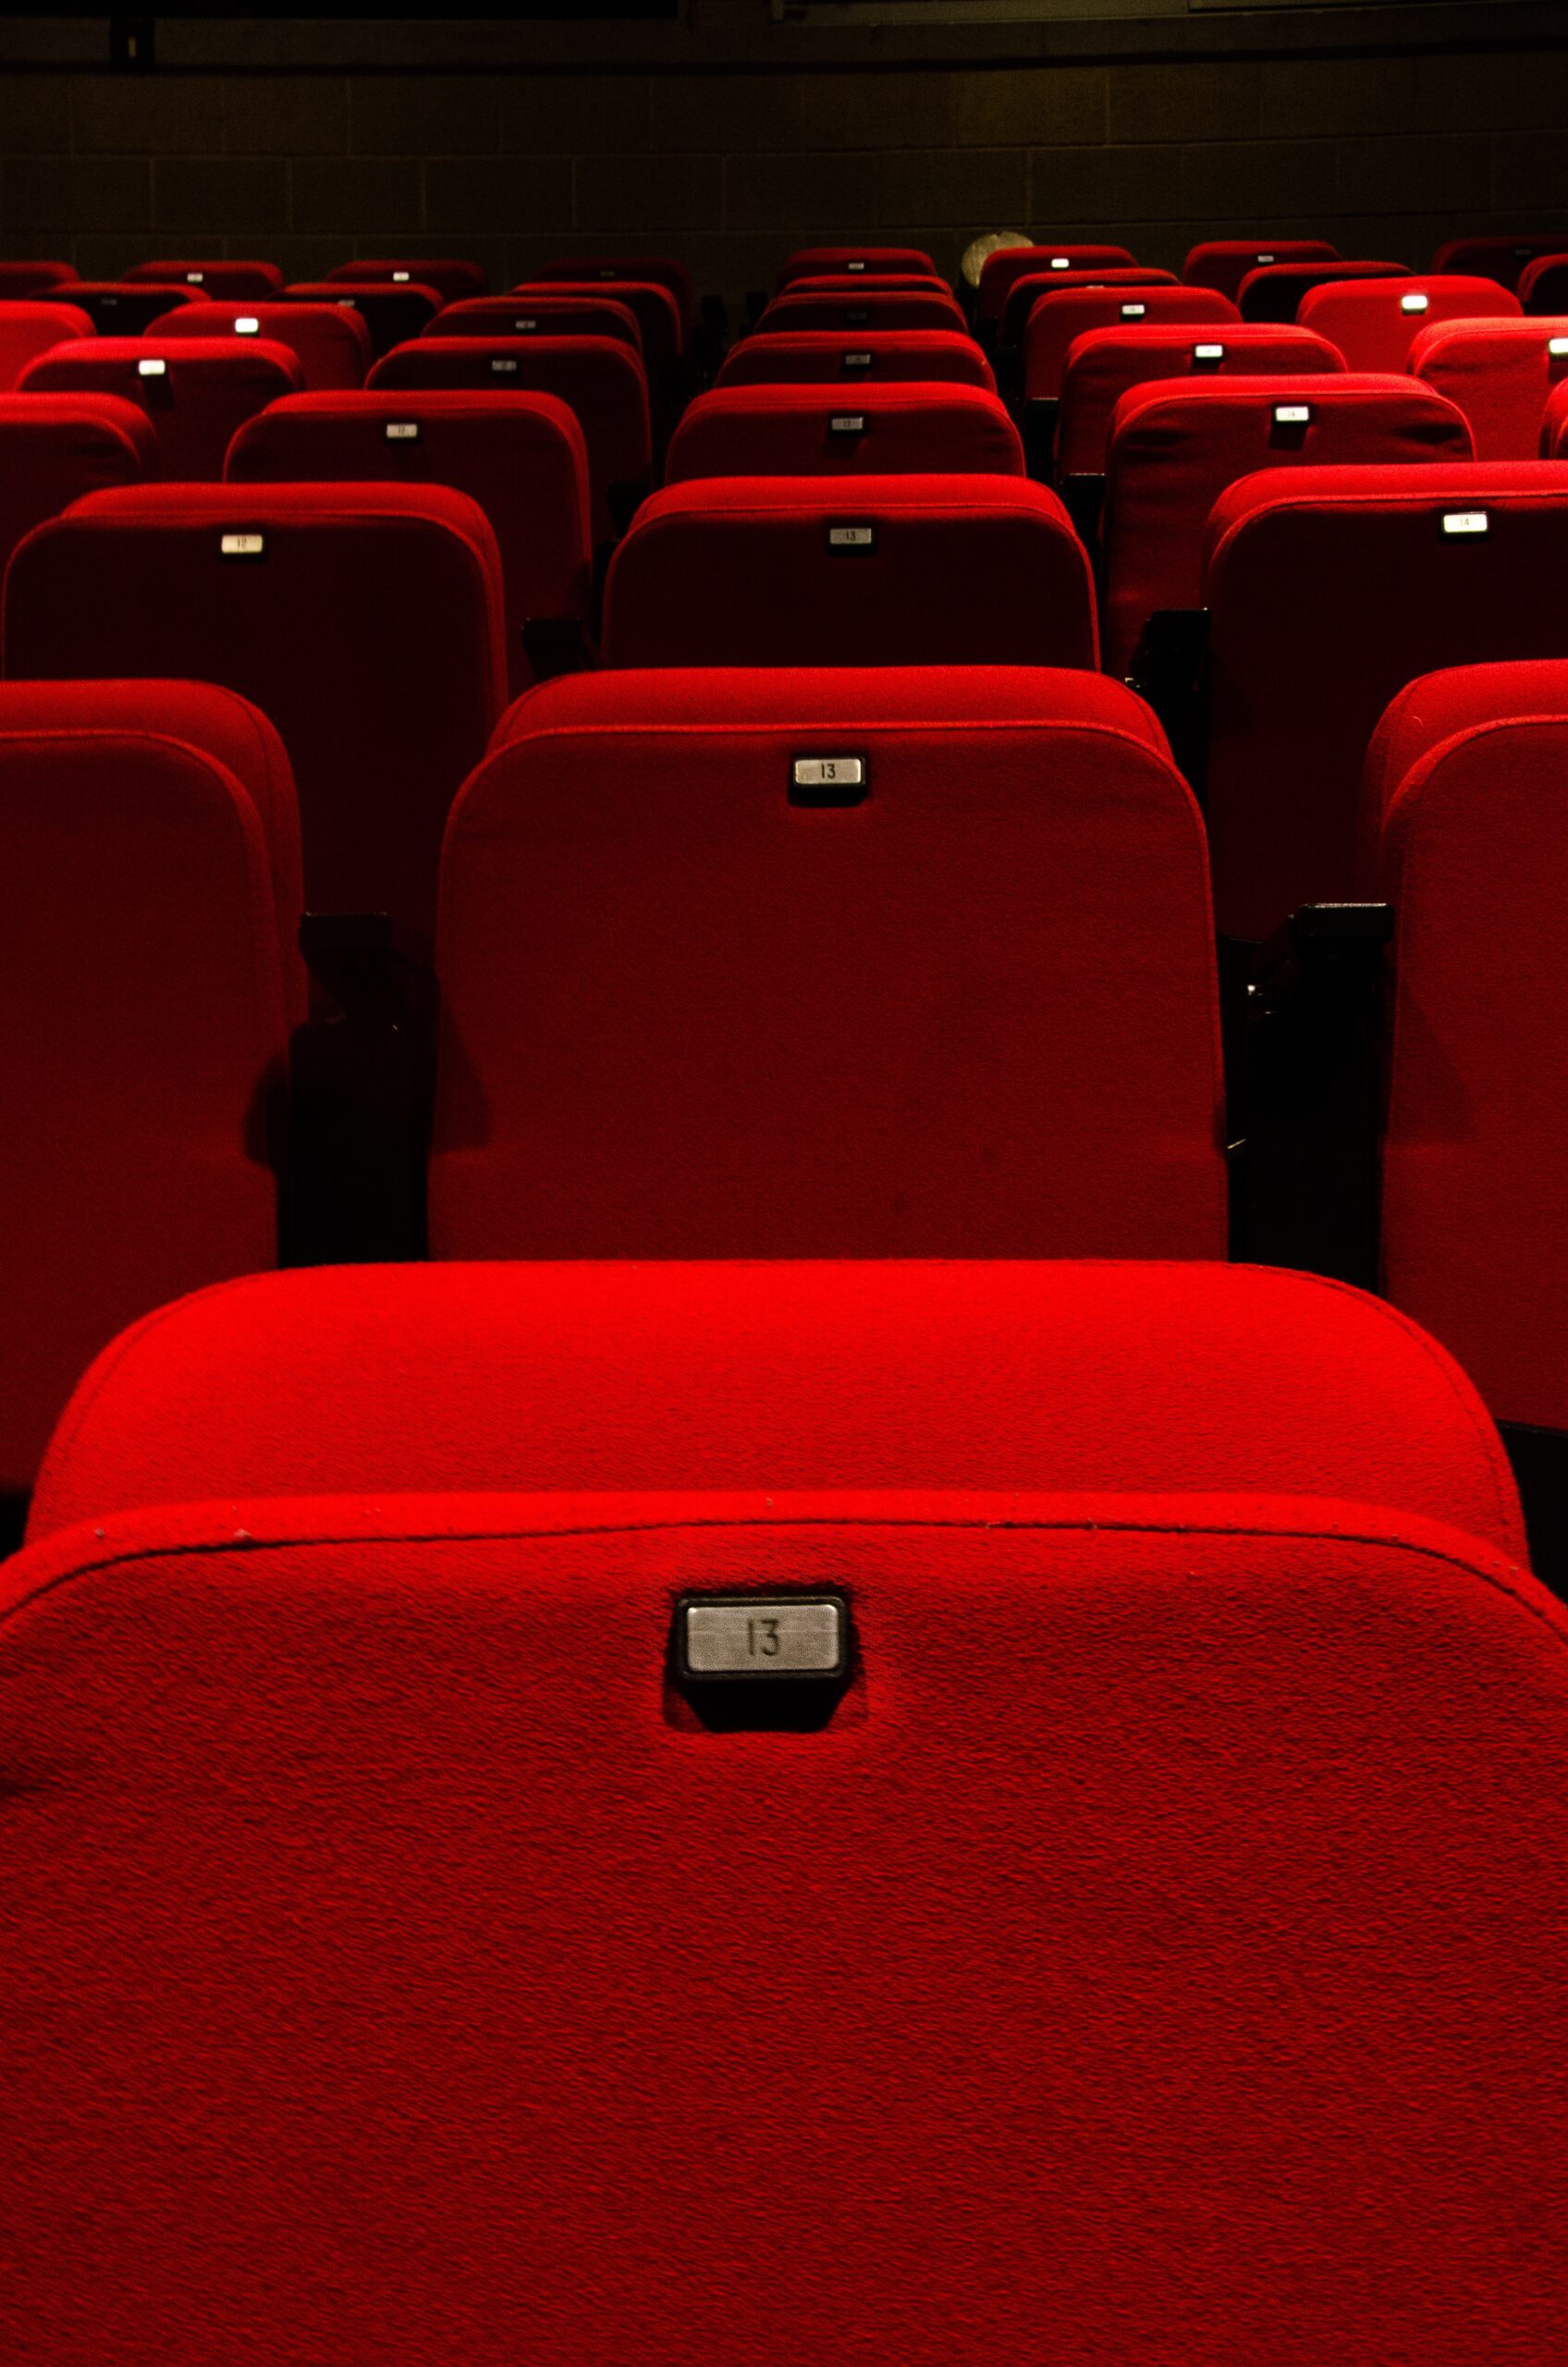 red-magenta-movie-theater-159198